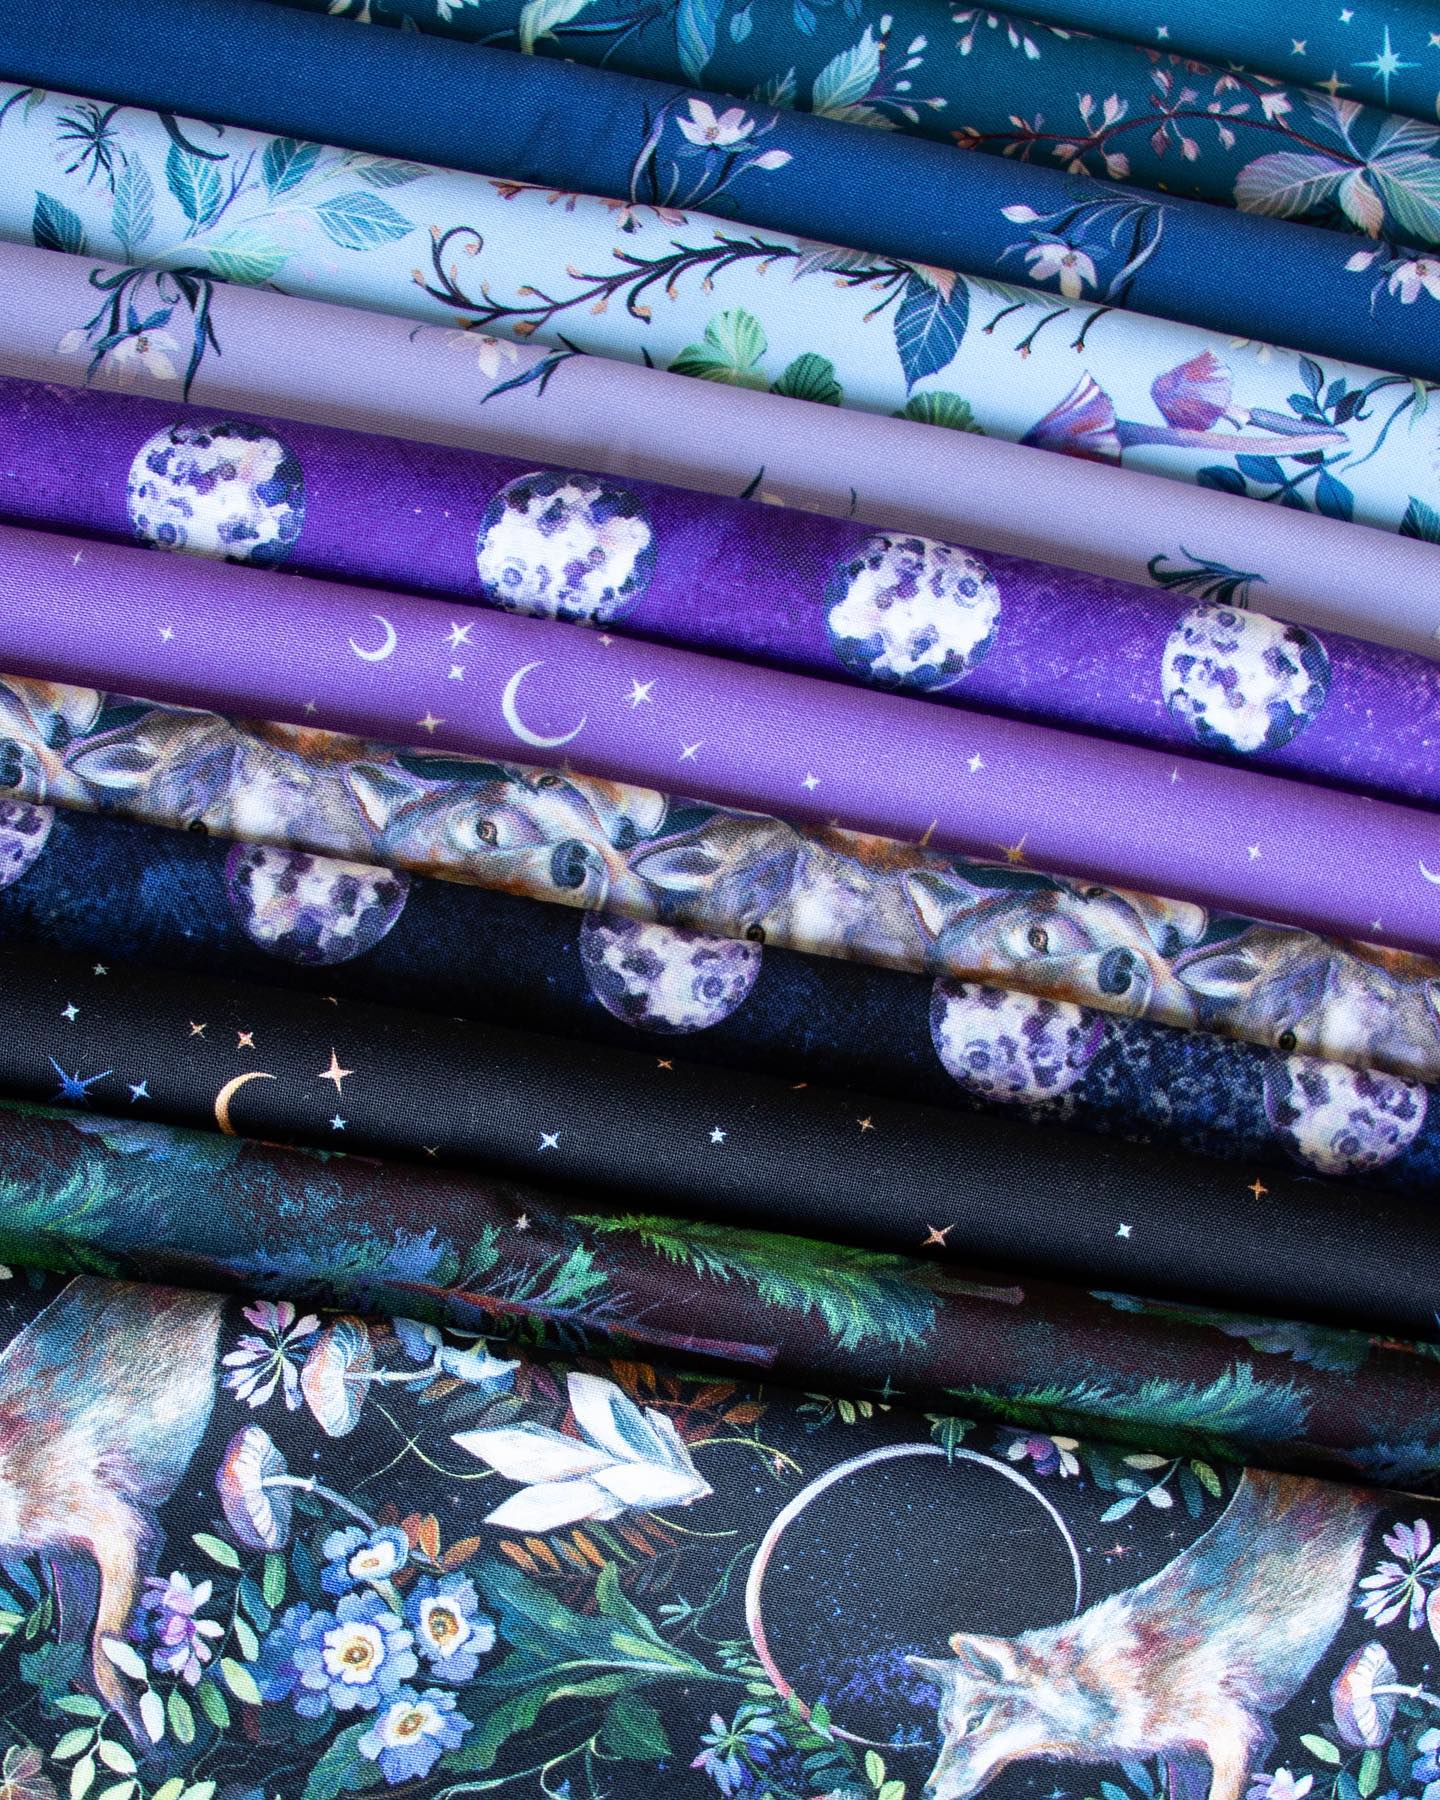 Full Moon Foliage on Blue Quilt Fabric by Clara McAllister for Figo Fabrics - Jammin Threads